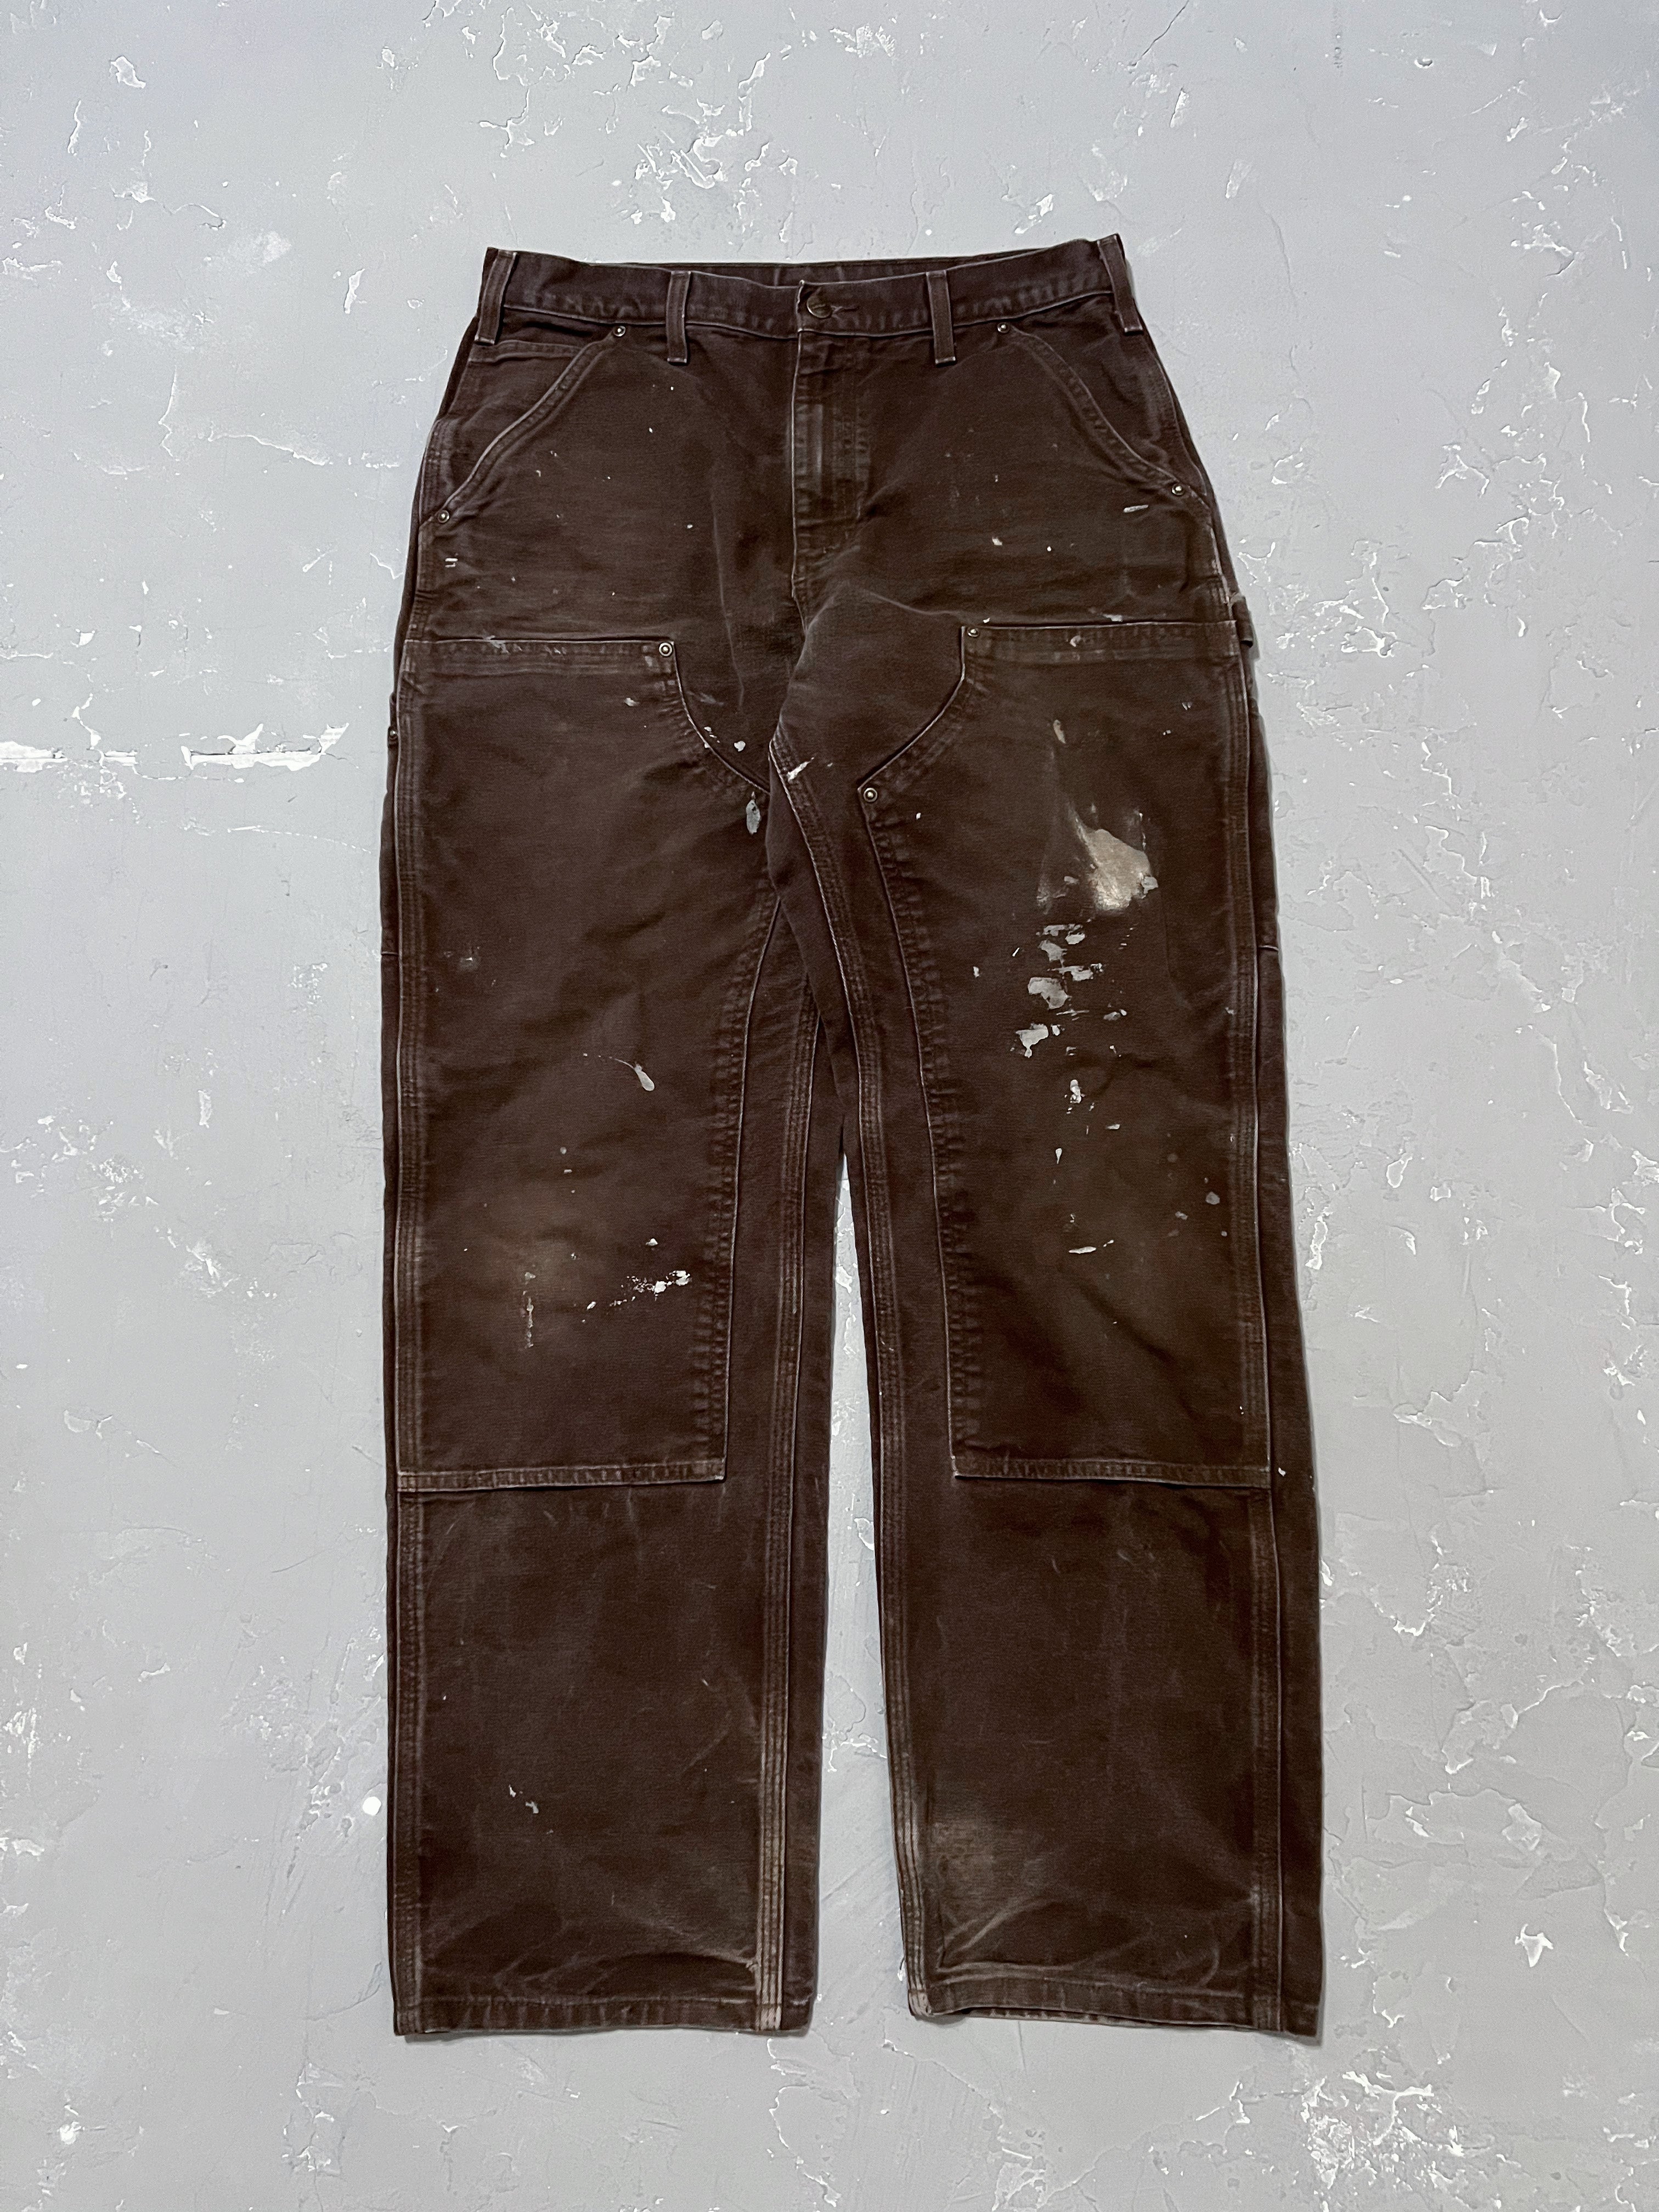 Carhartt Chocolate Painted Double Knee Pants [32 x 32]